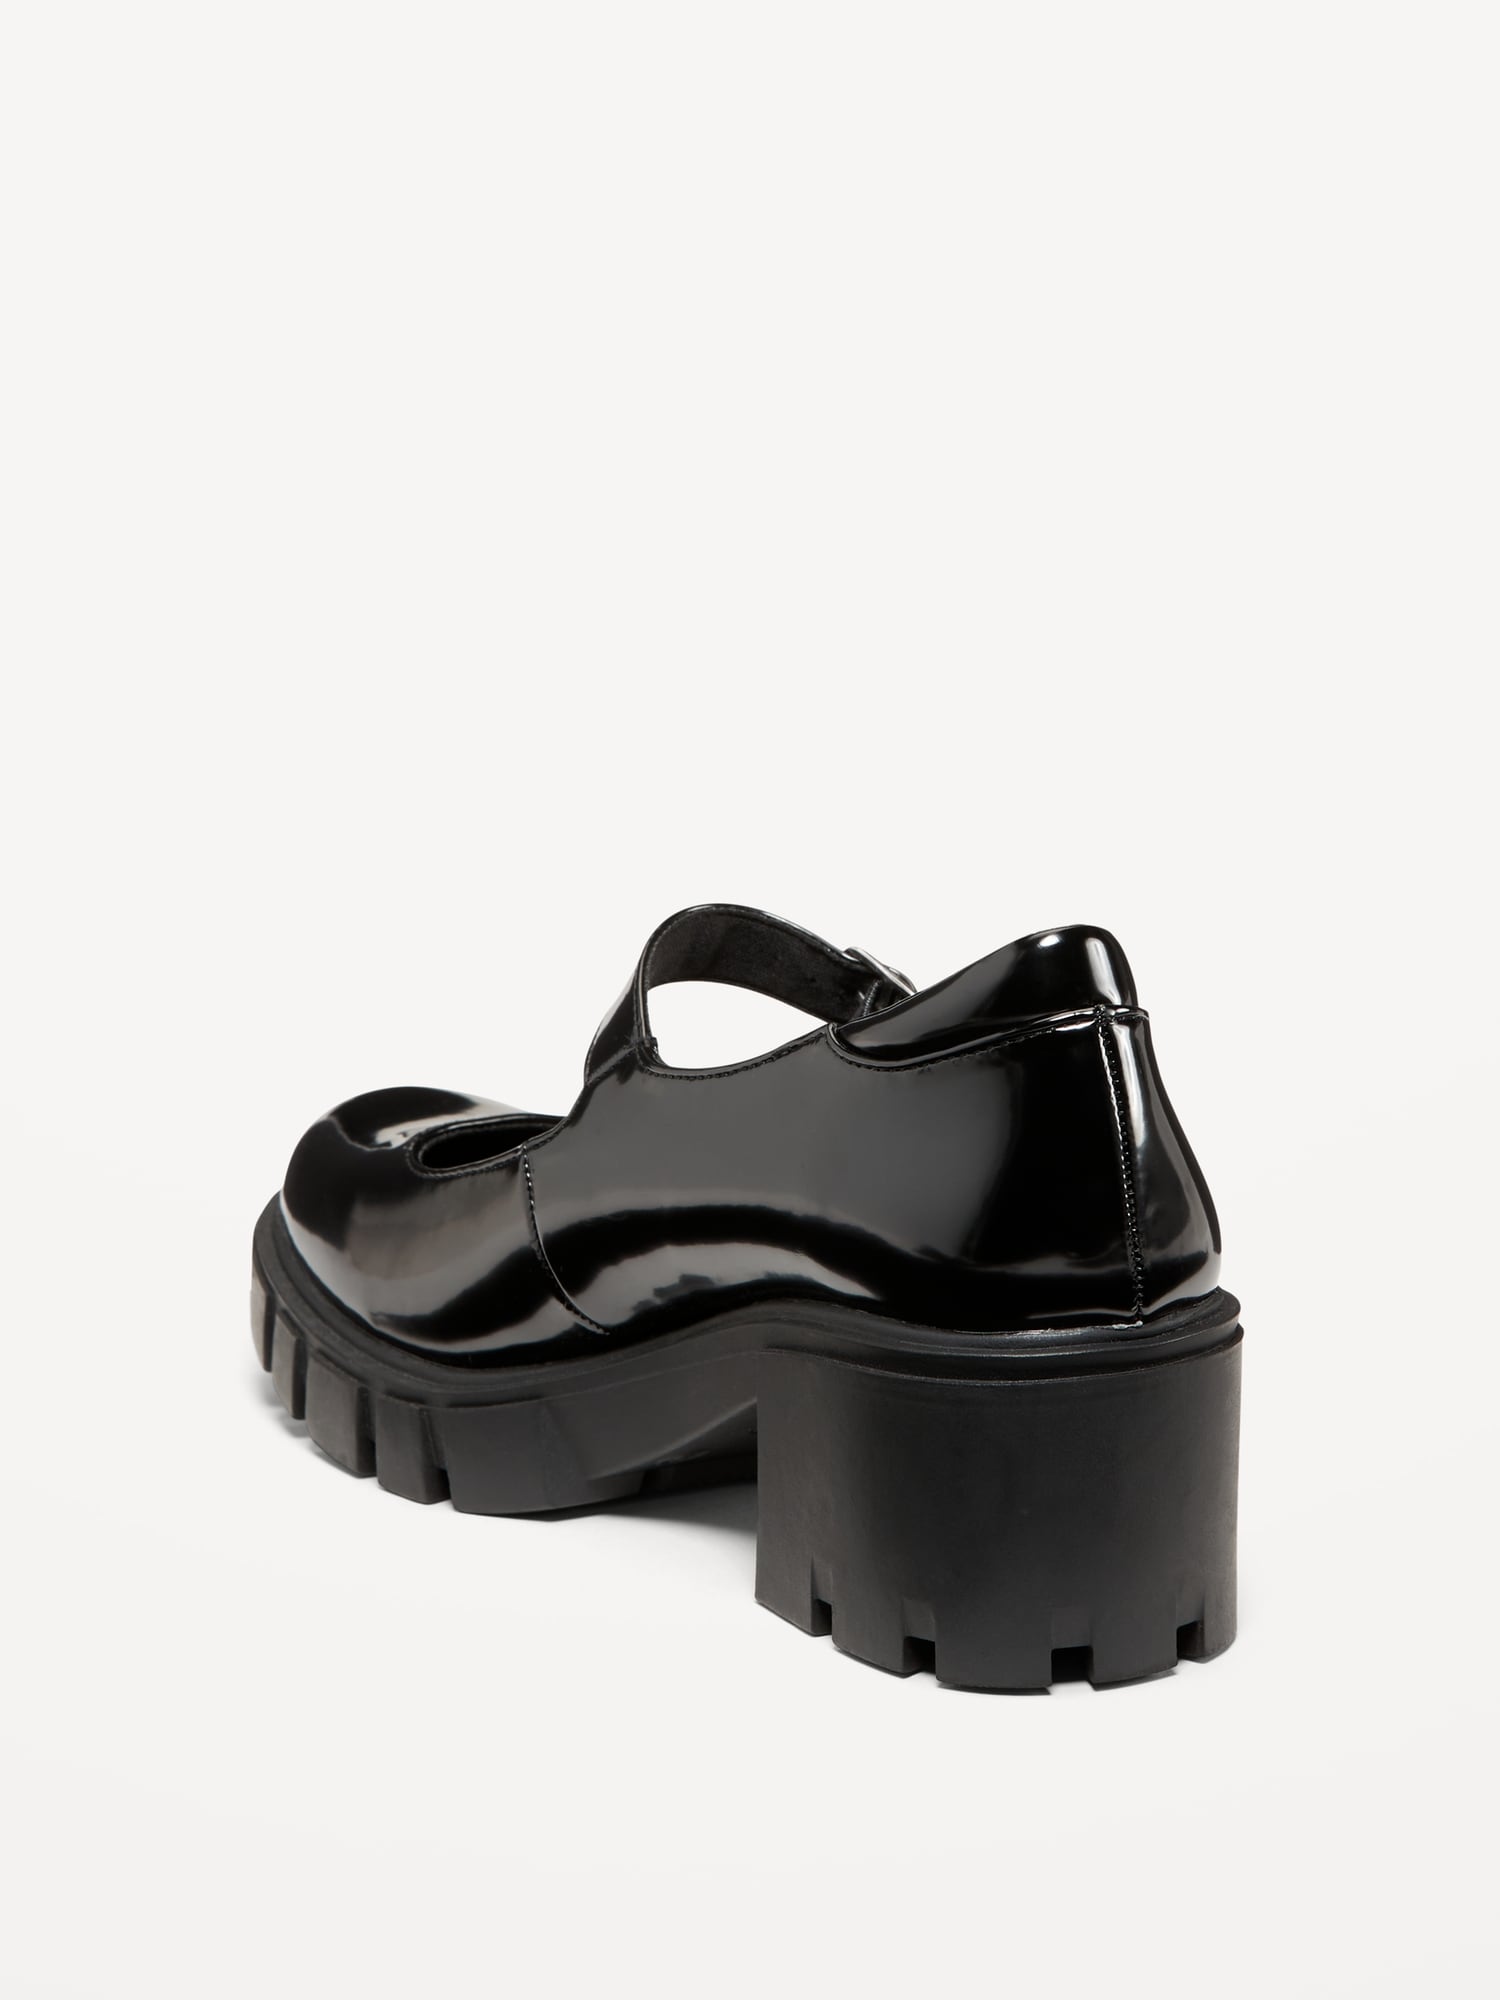 ASOS DESIGN Wide Fit Penny platform mary jane heeled shoes in black | ASOS